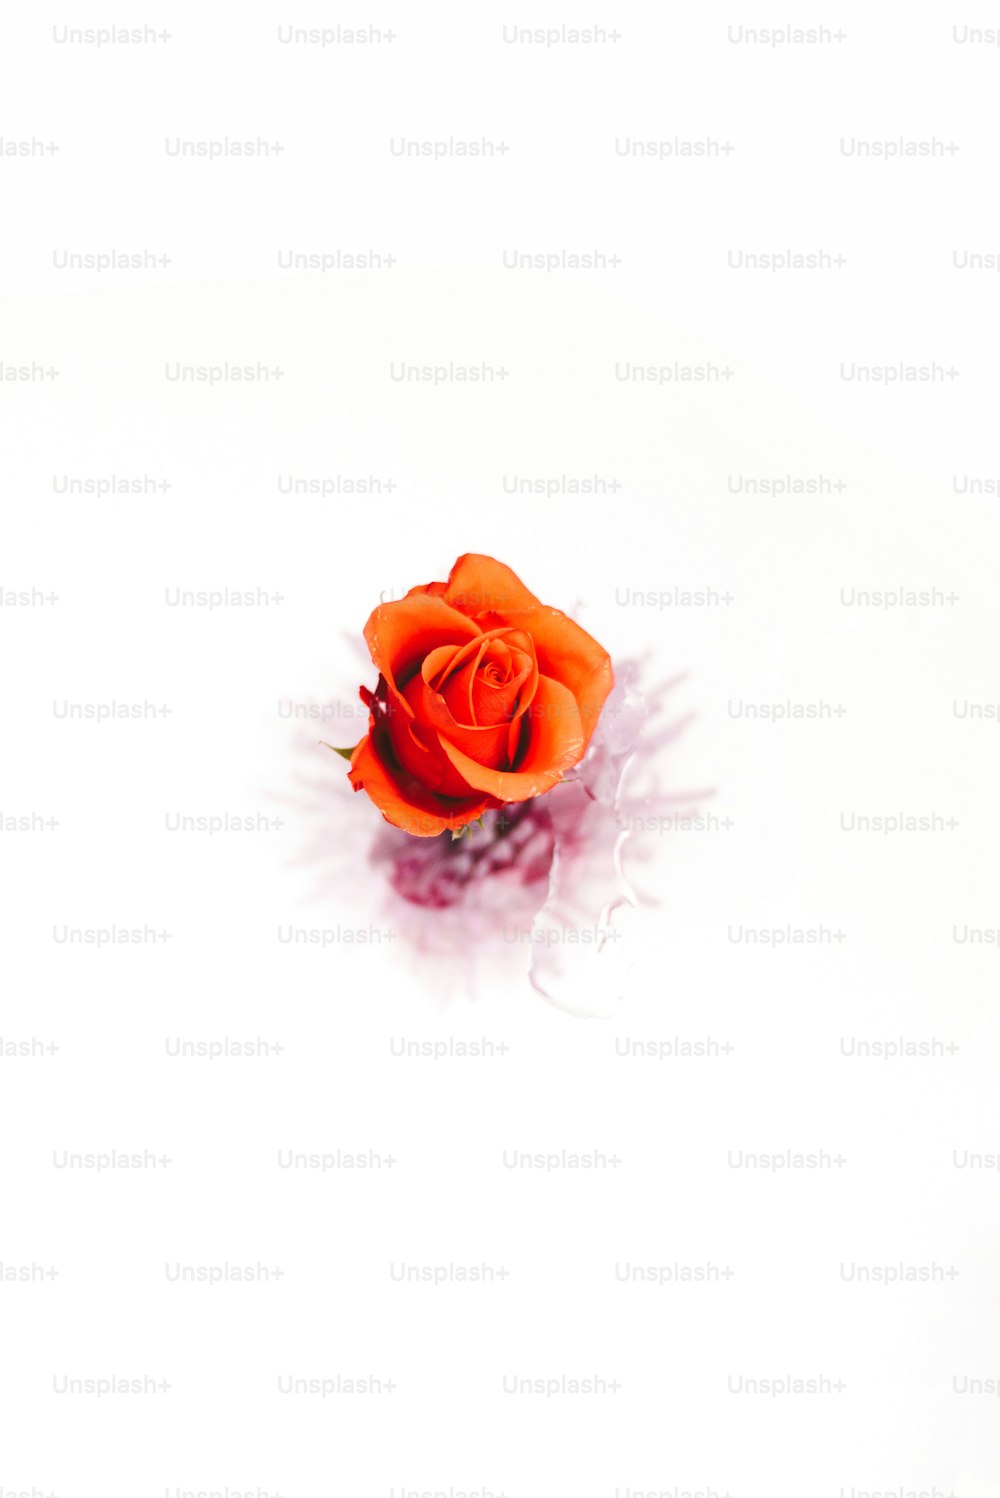 a single orange rose on a white surface